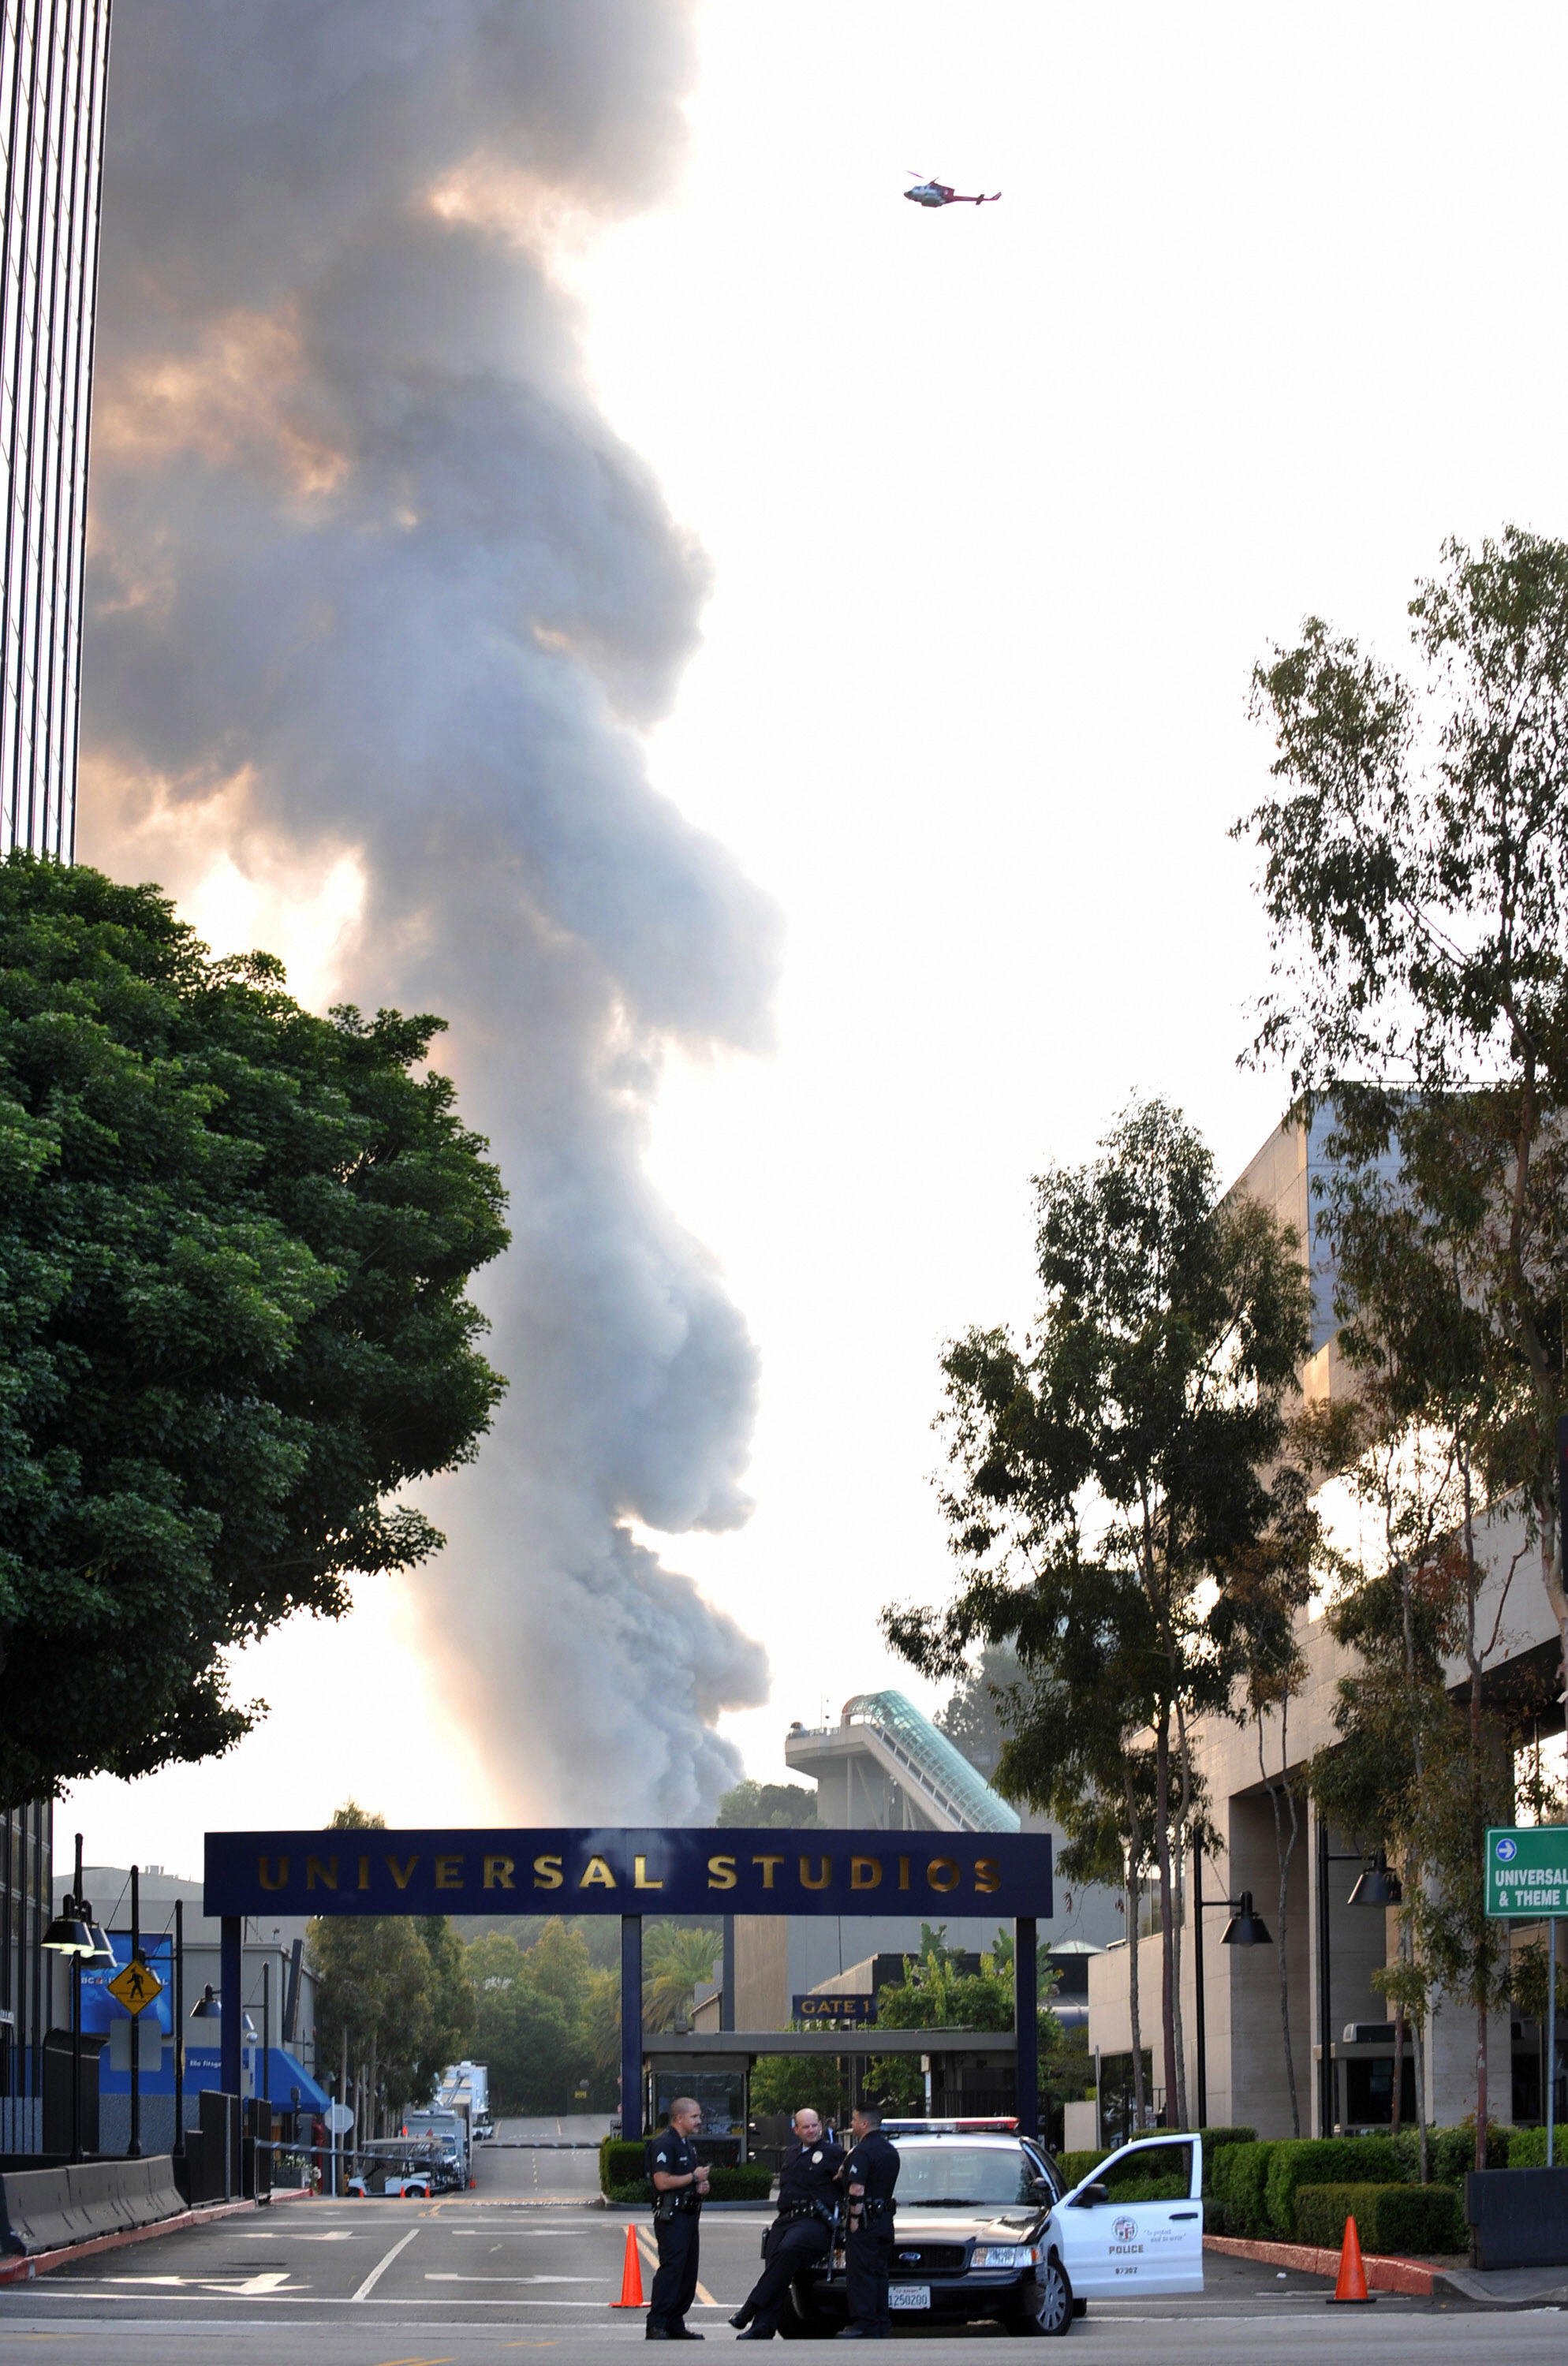 Universal Studios fire in 2008